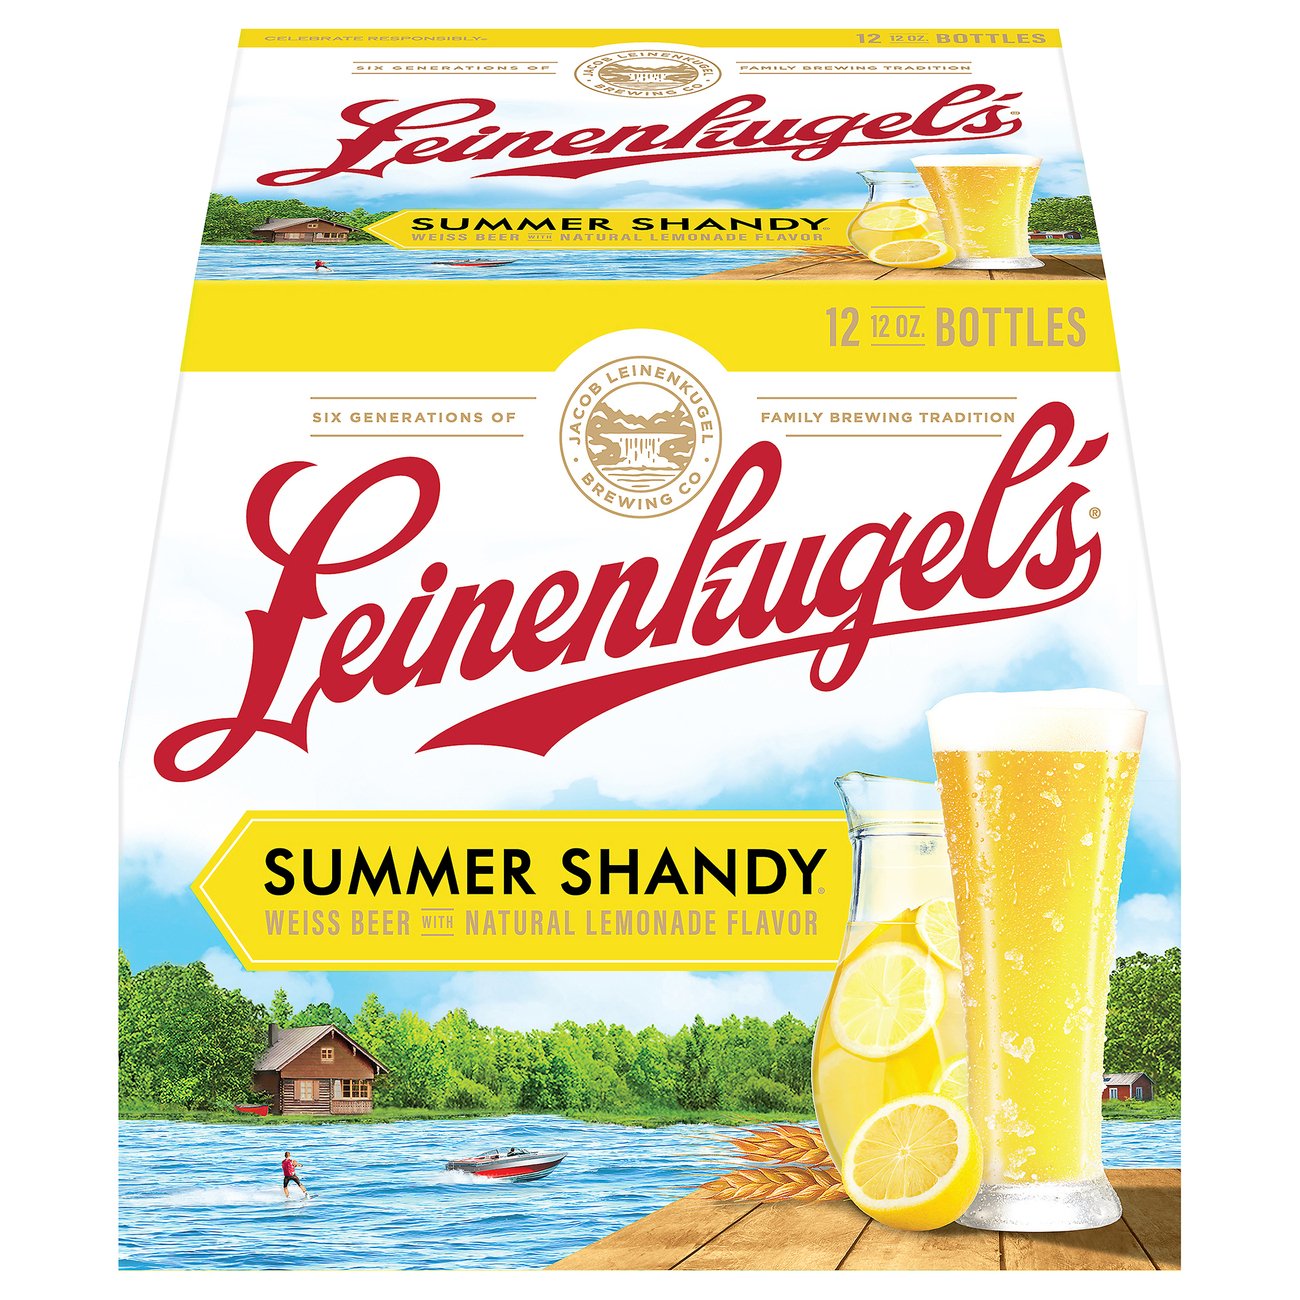 Leinenkugels Summer Shandy Beer 12 Oz Bottles Shop Beer At H E B